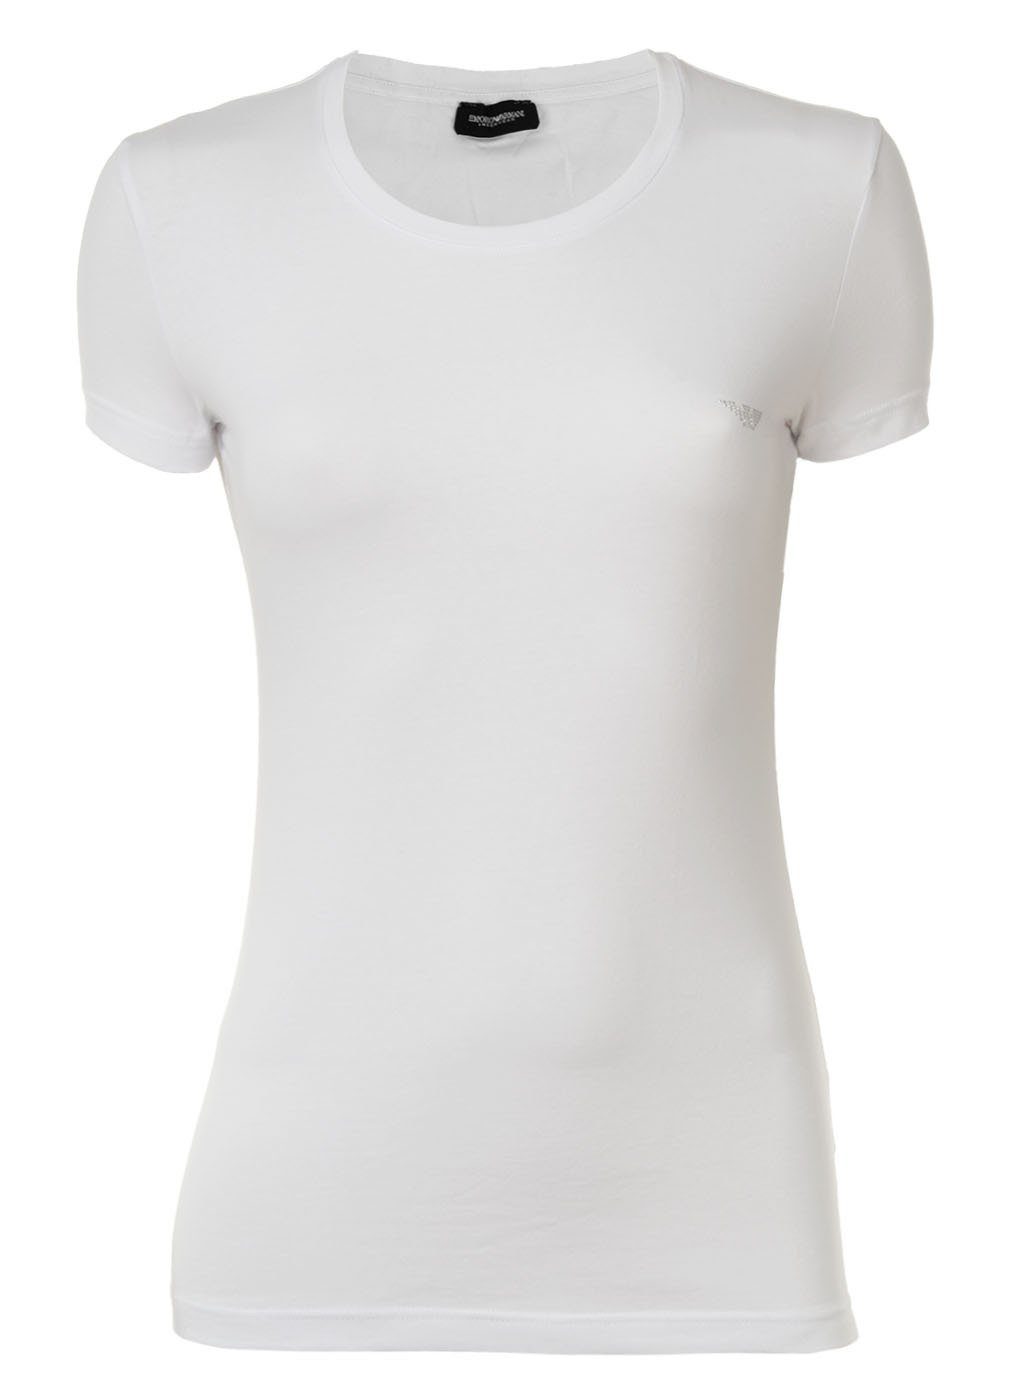 Emporio Armani T-Shirt Damen T-Shirt - Rundhals, Loungewear, Kurzarm Weiss